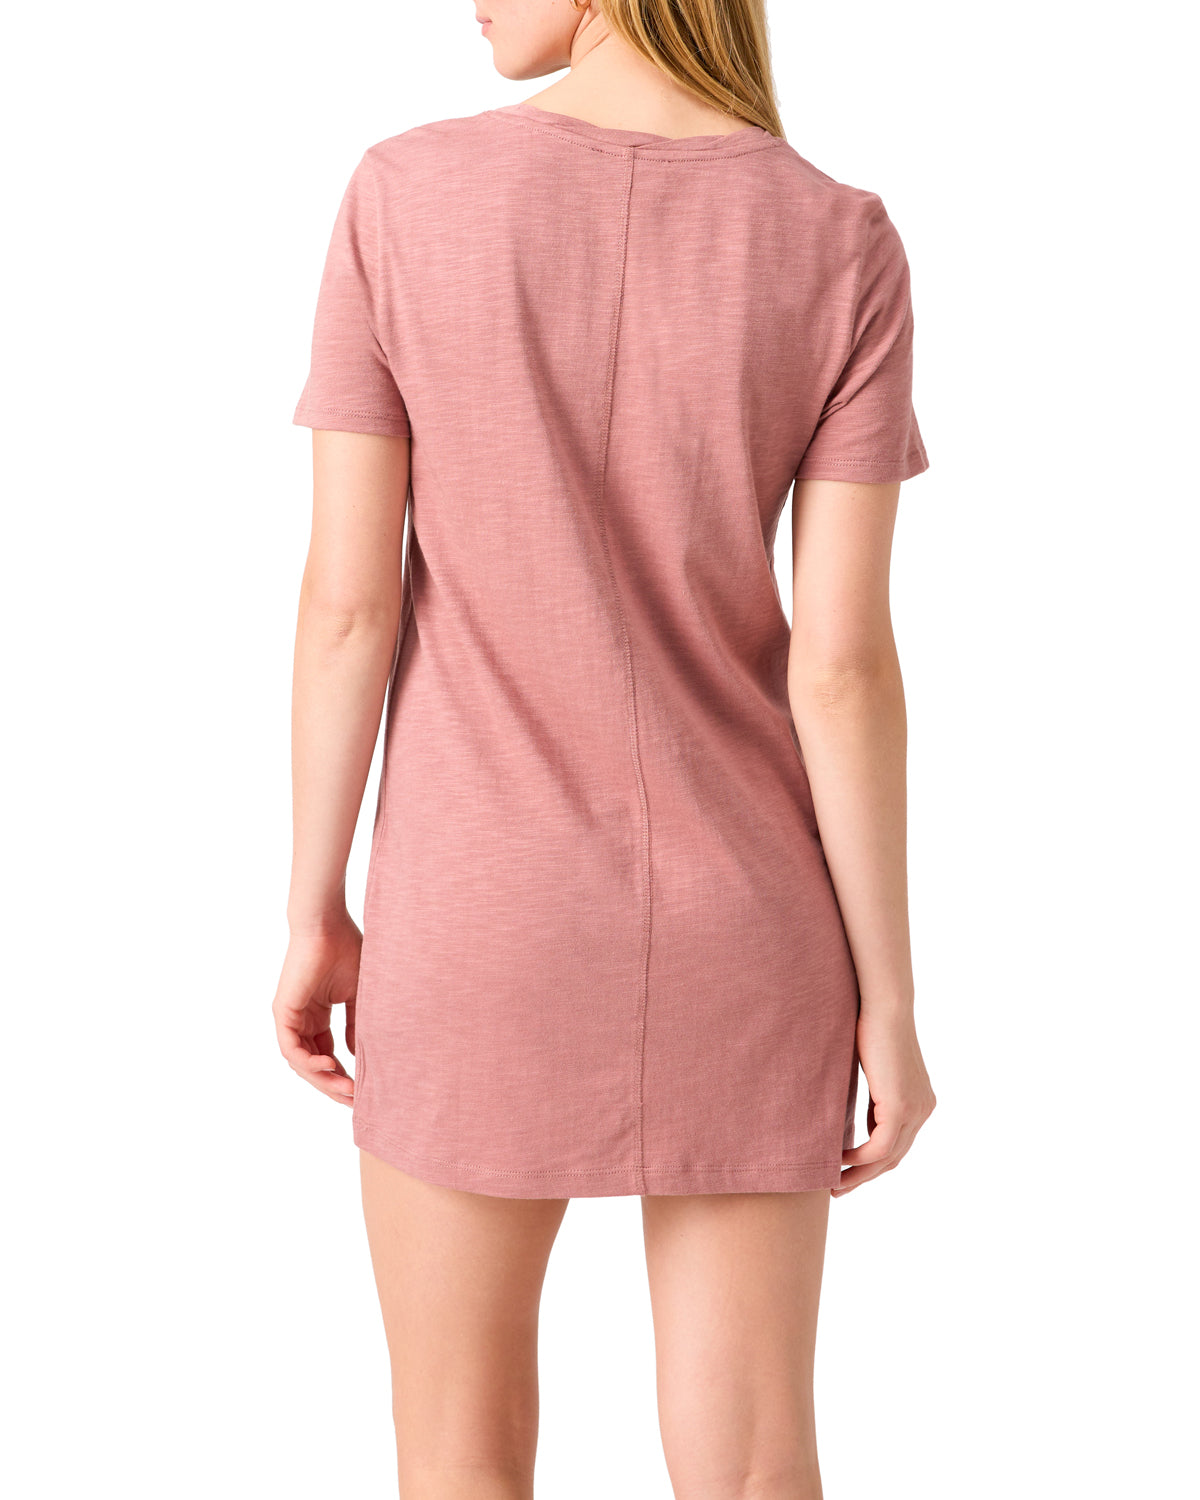 Ash Rose T-shirt Dress